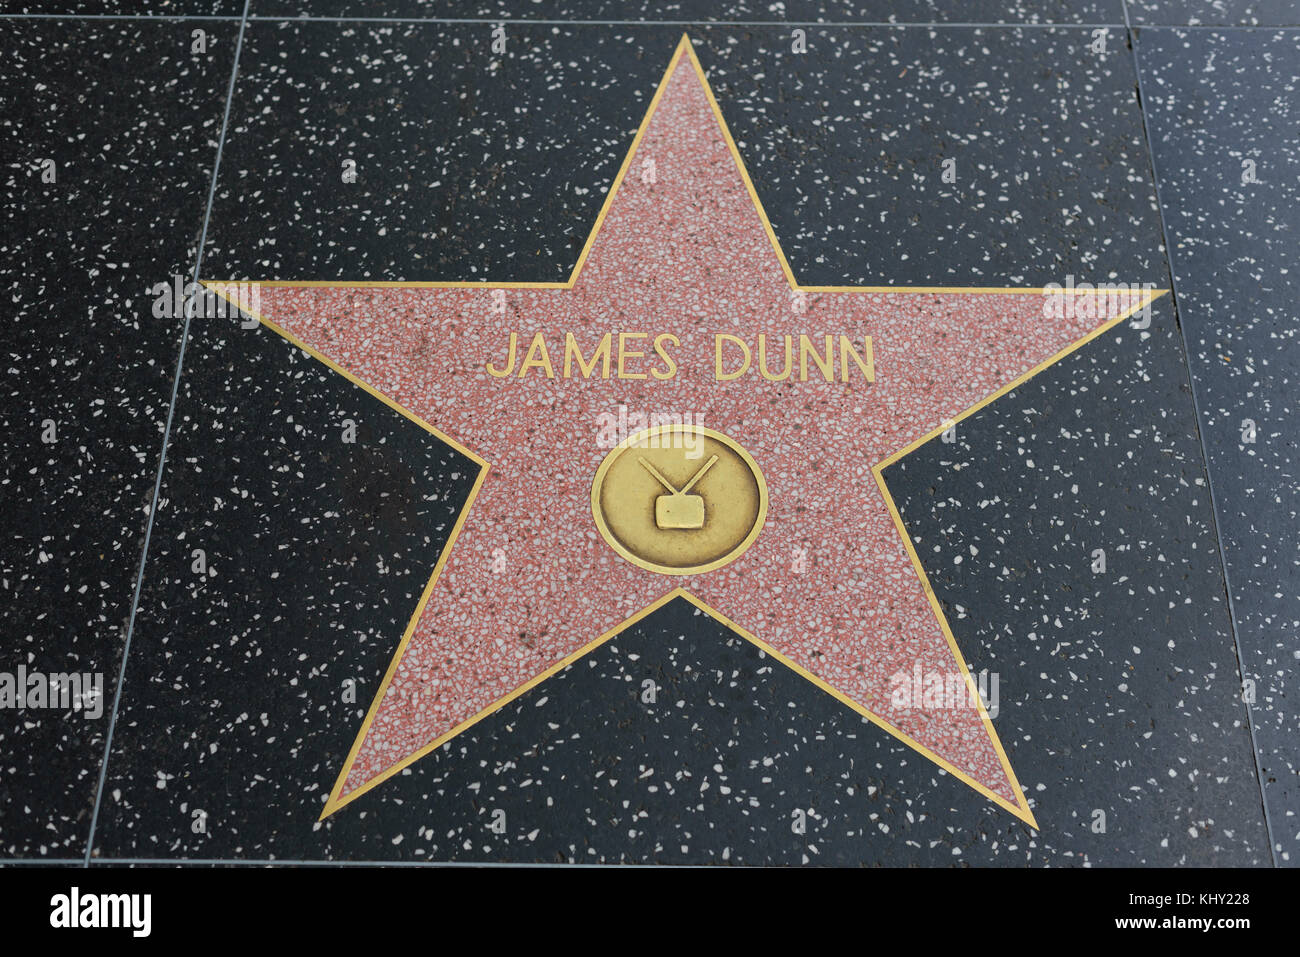 HOLLYWOOD, CA - DICEMBRE 06: James Dunn stella sulla Hollywood Walk of Fame a Hollywood, California il 6 dicembre 2016. Foto Stock